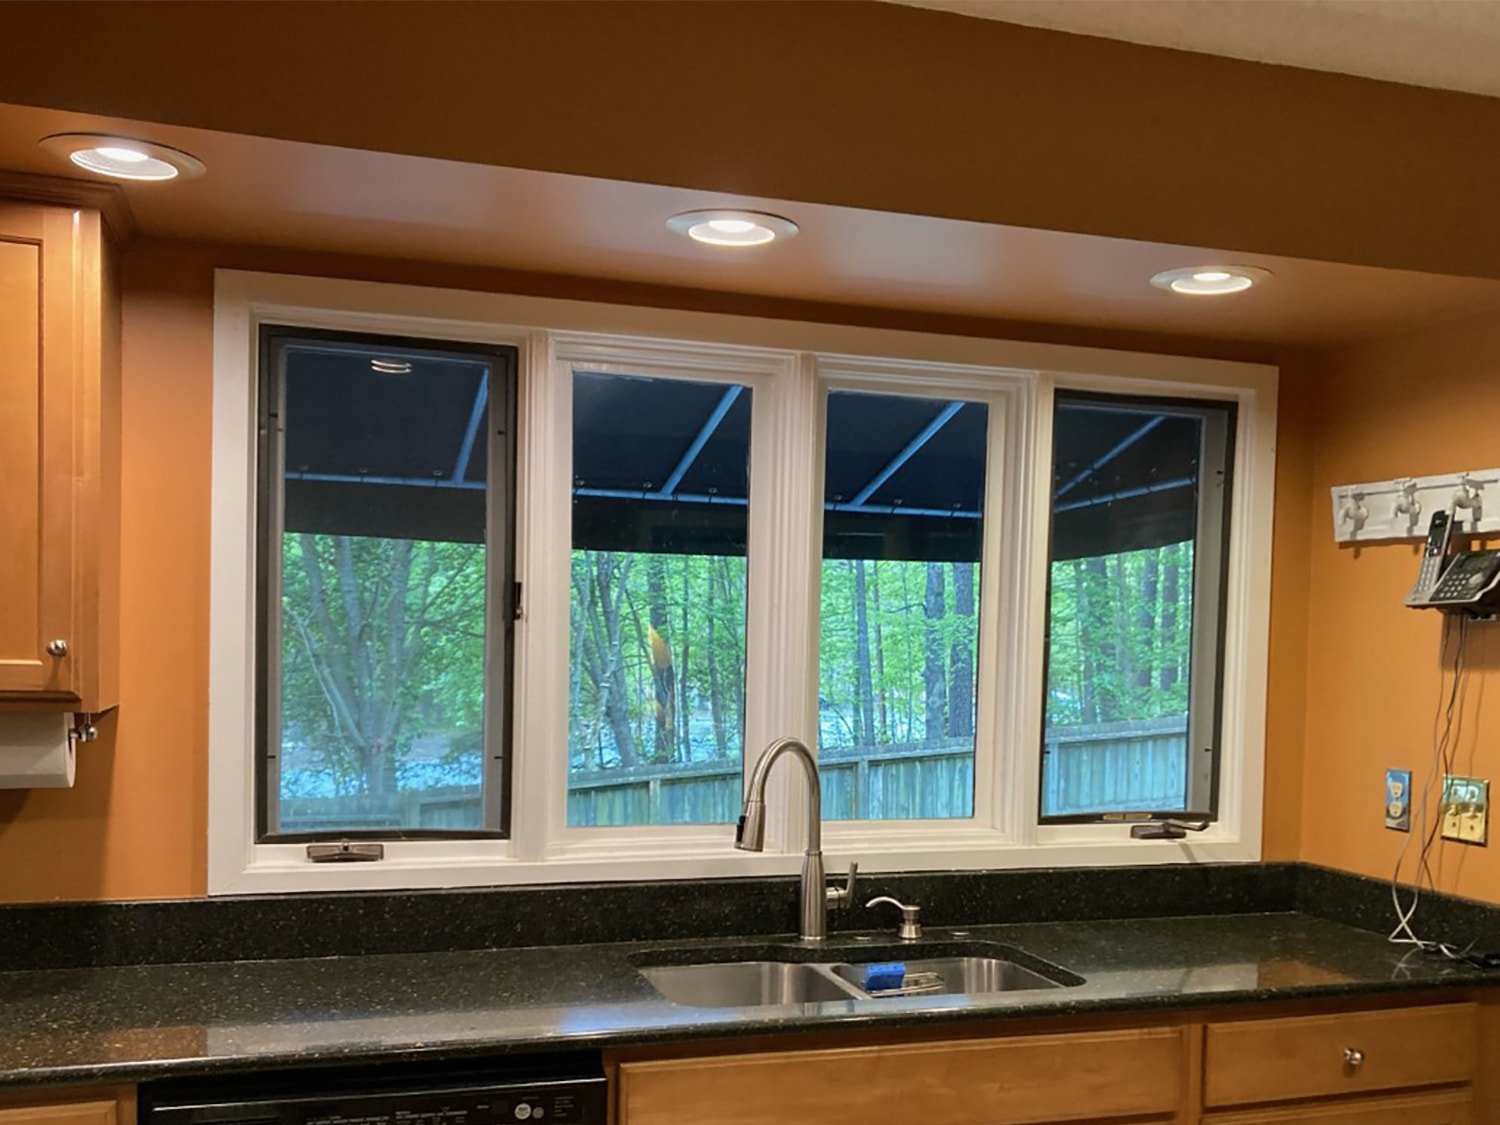 Four casement windows sit above the sink in Henrico kitchen